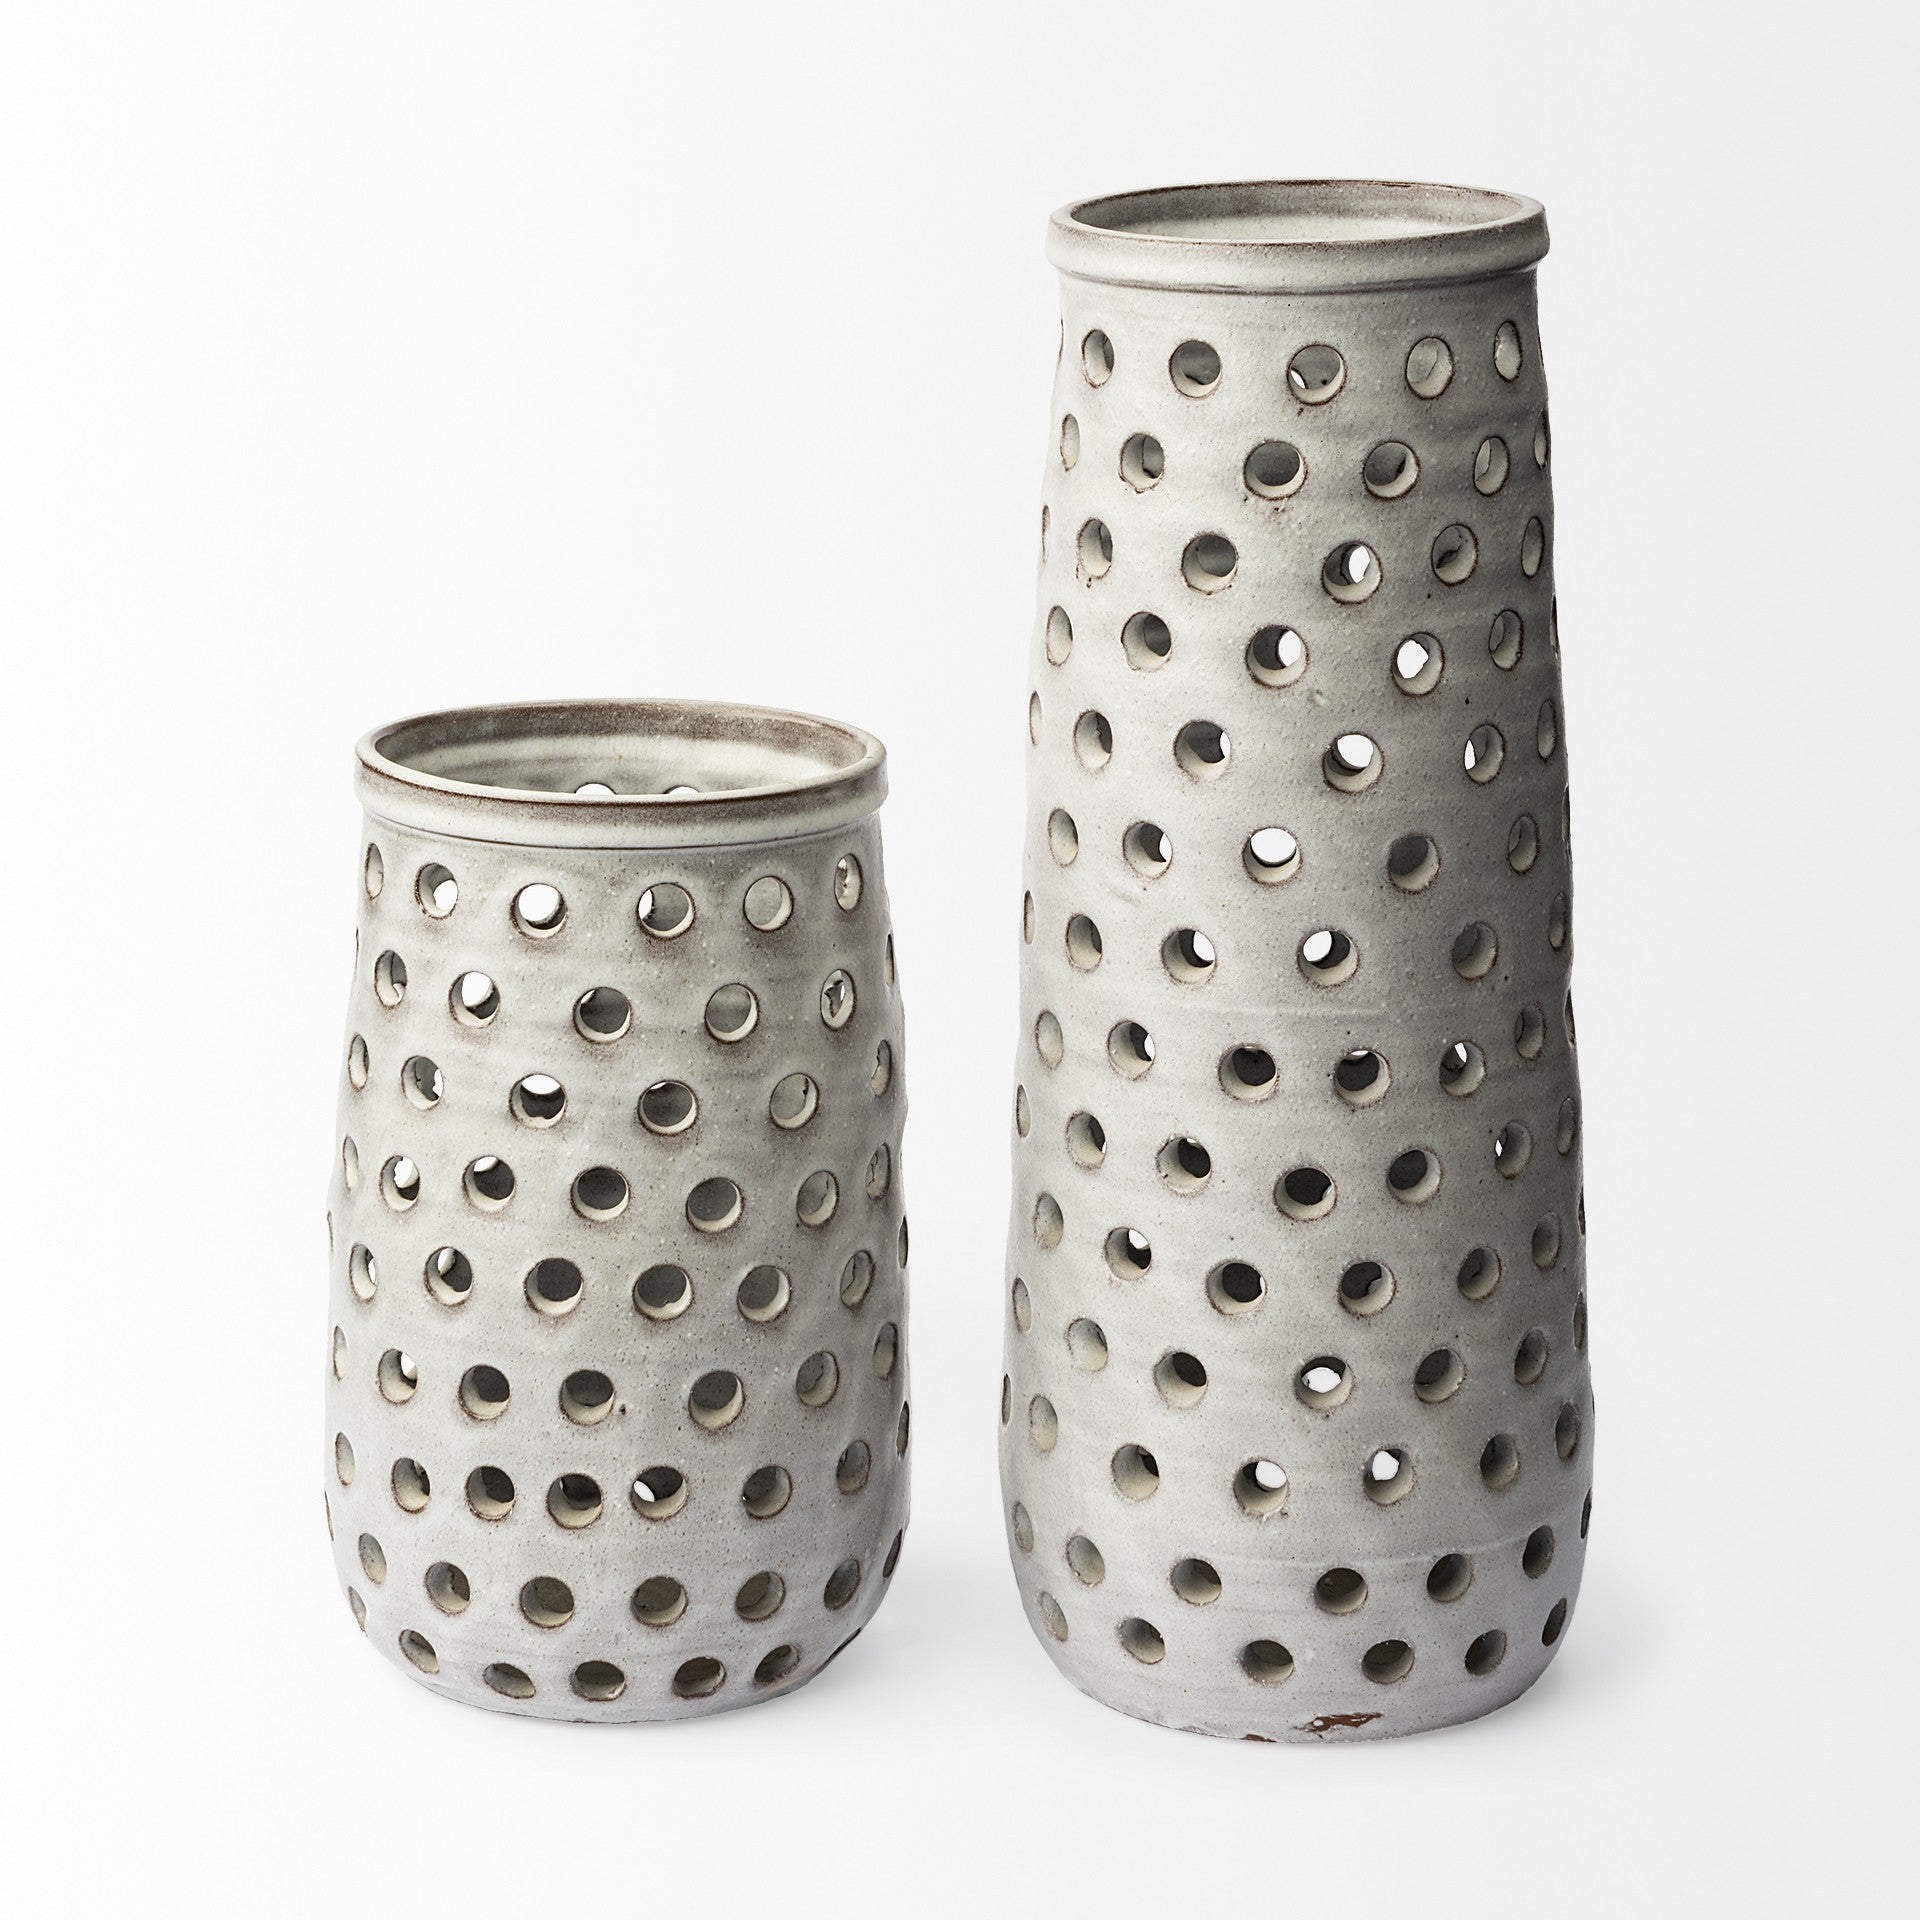 12" Organic White Glaze Pierced Dot Ceramic Vase